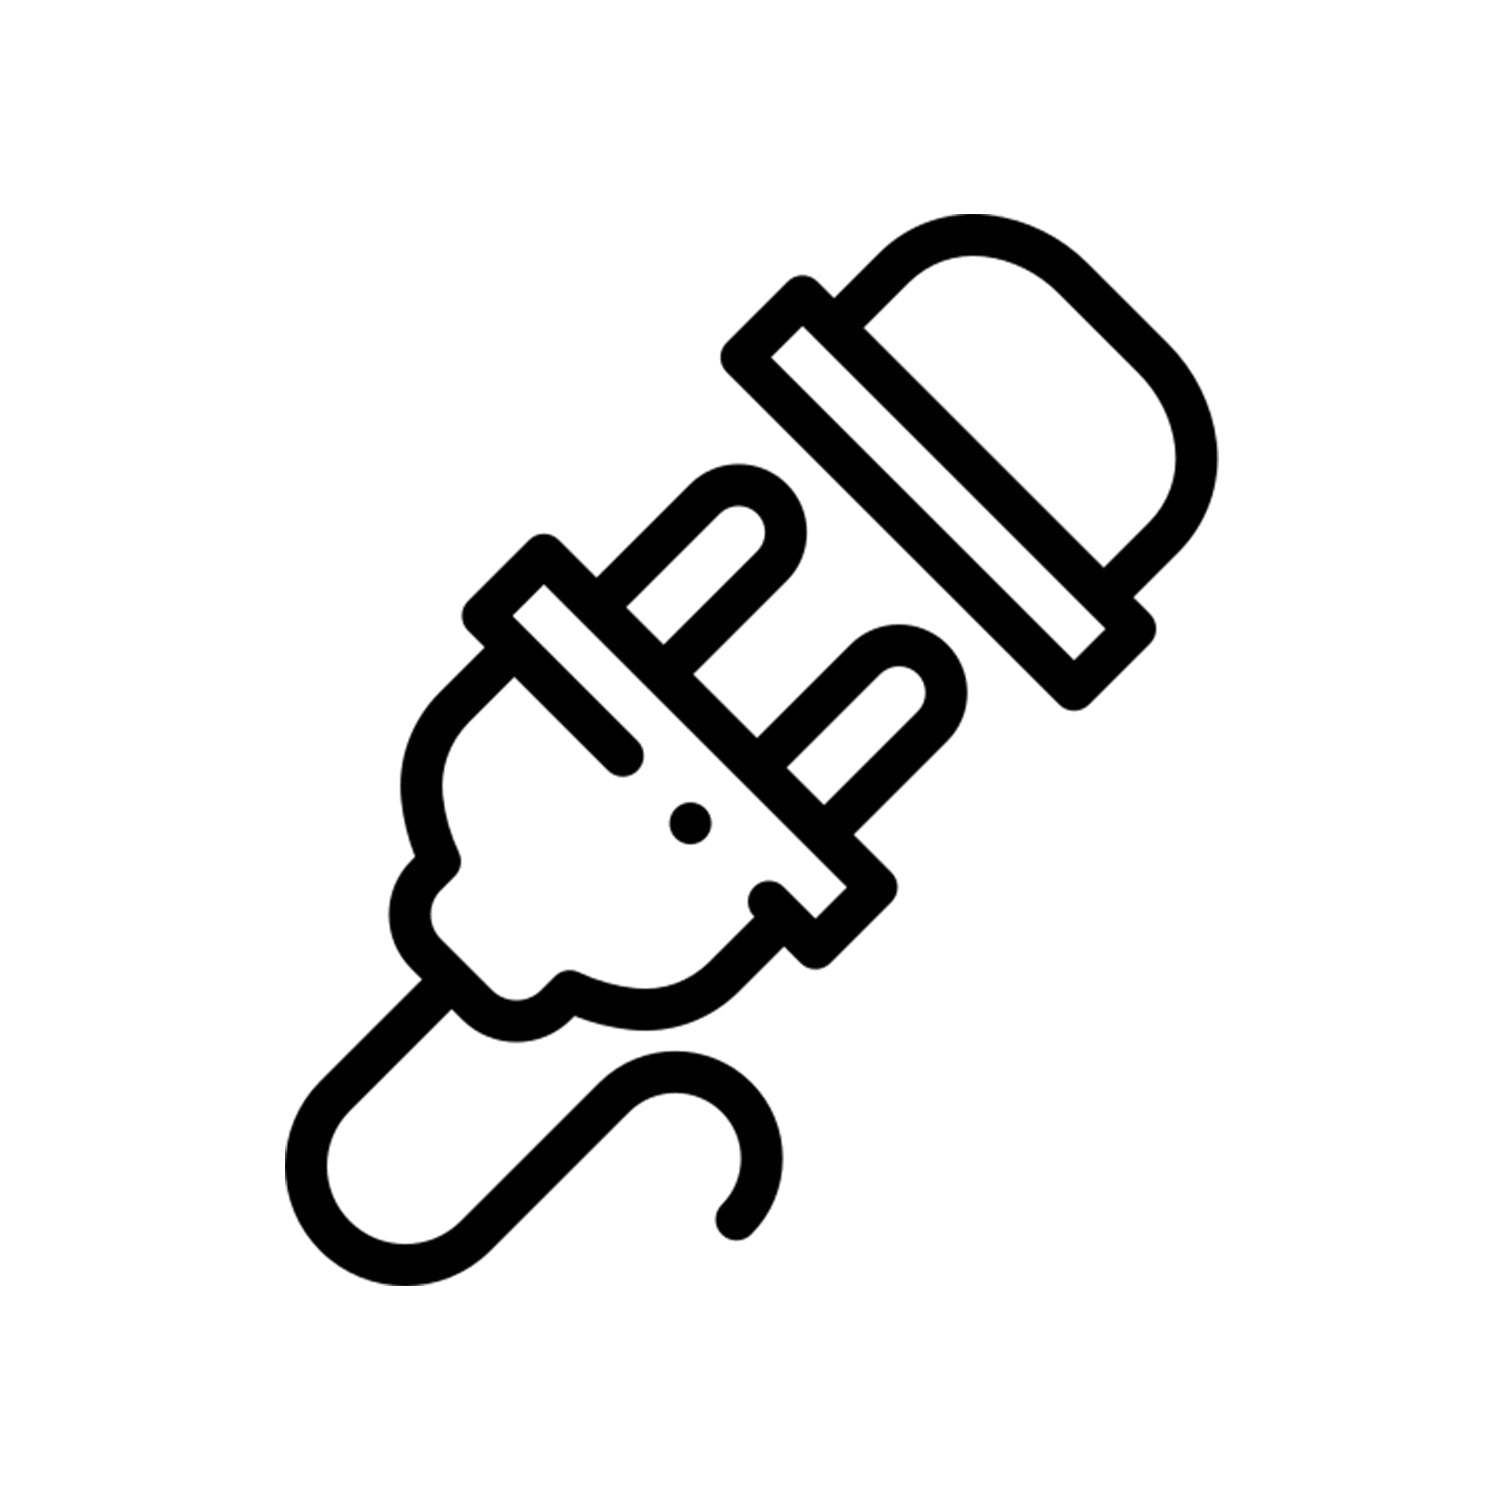 carplay power cord icon